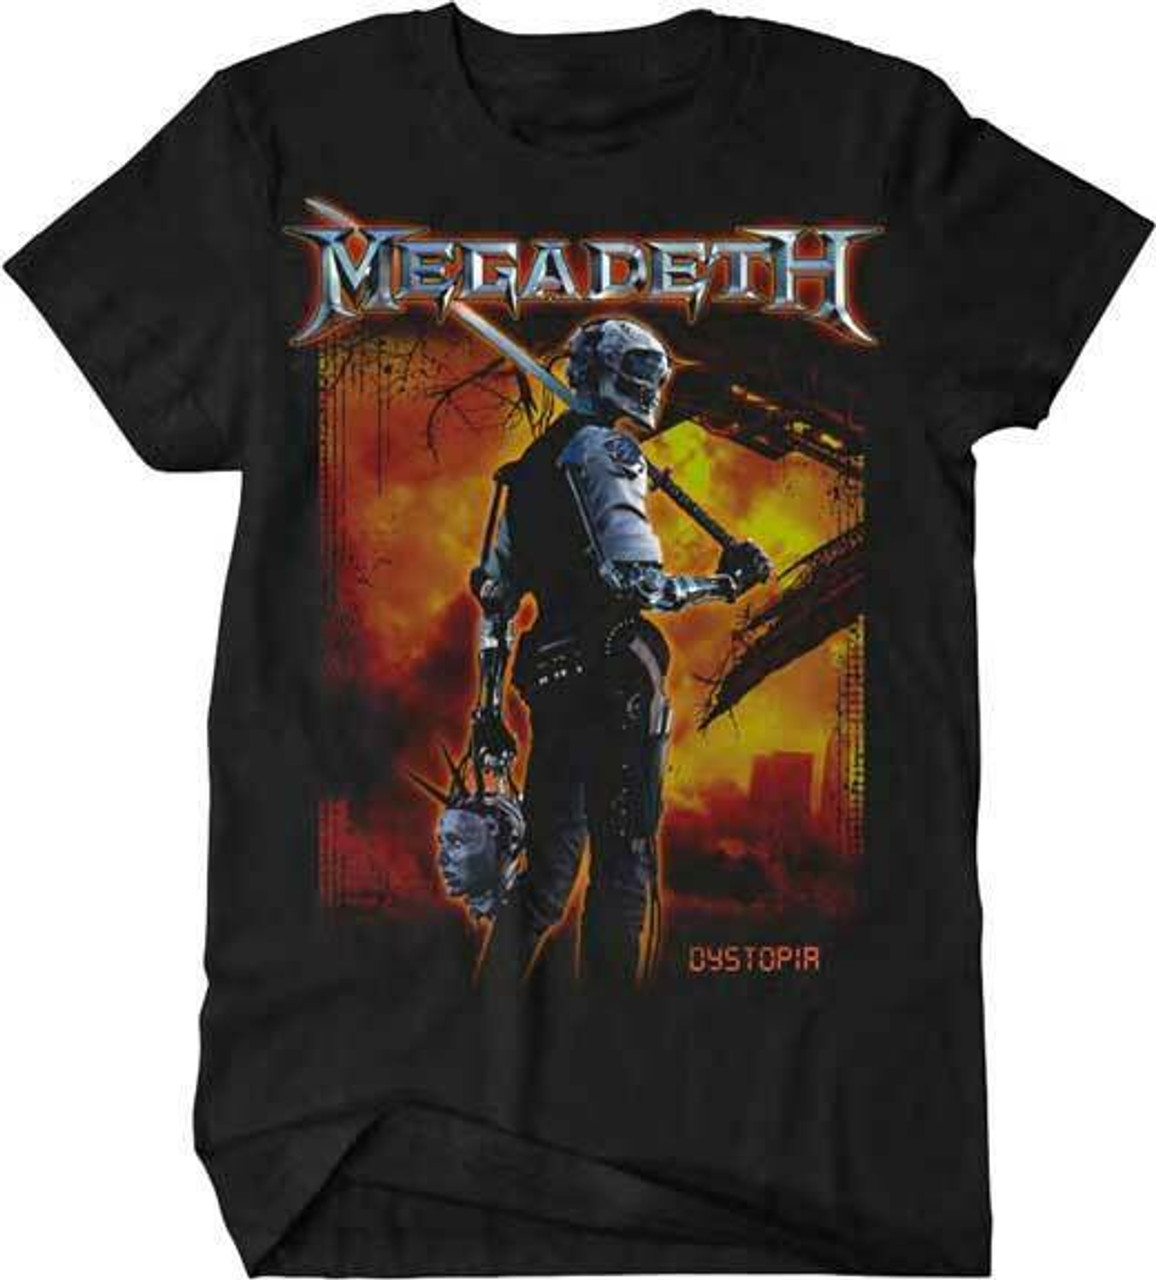 Kvarter Flåde eksplicit Megadeth Dystopia Album Cover Heavy Thrash Metal Music Band T Shirt  MEG10041 - Fearless Apparel